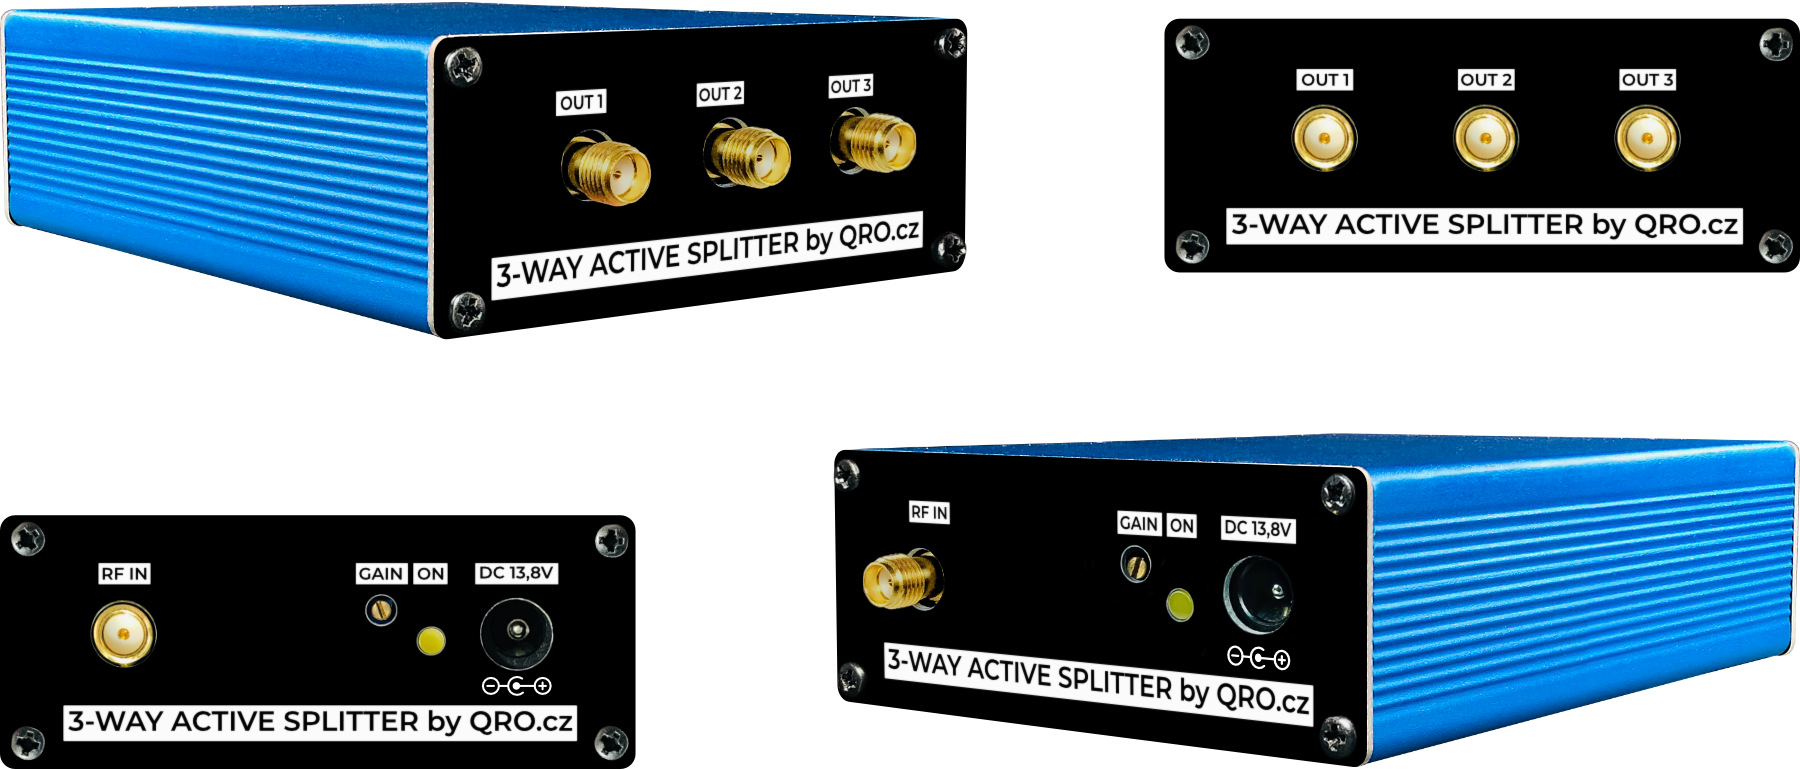 3-way active splitter in box assembled qro.cz hamparts.shop